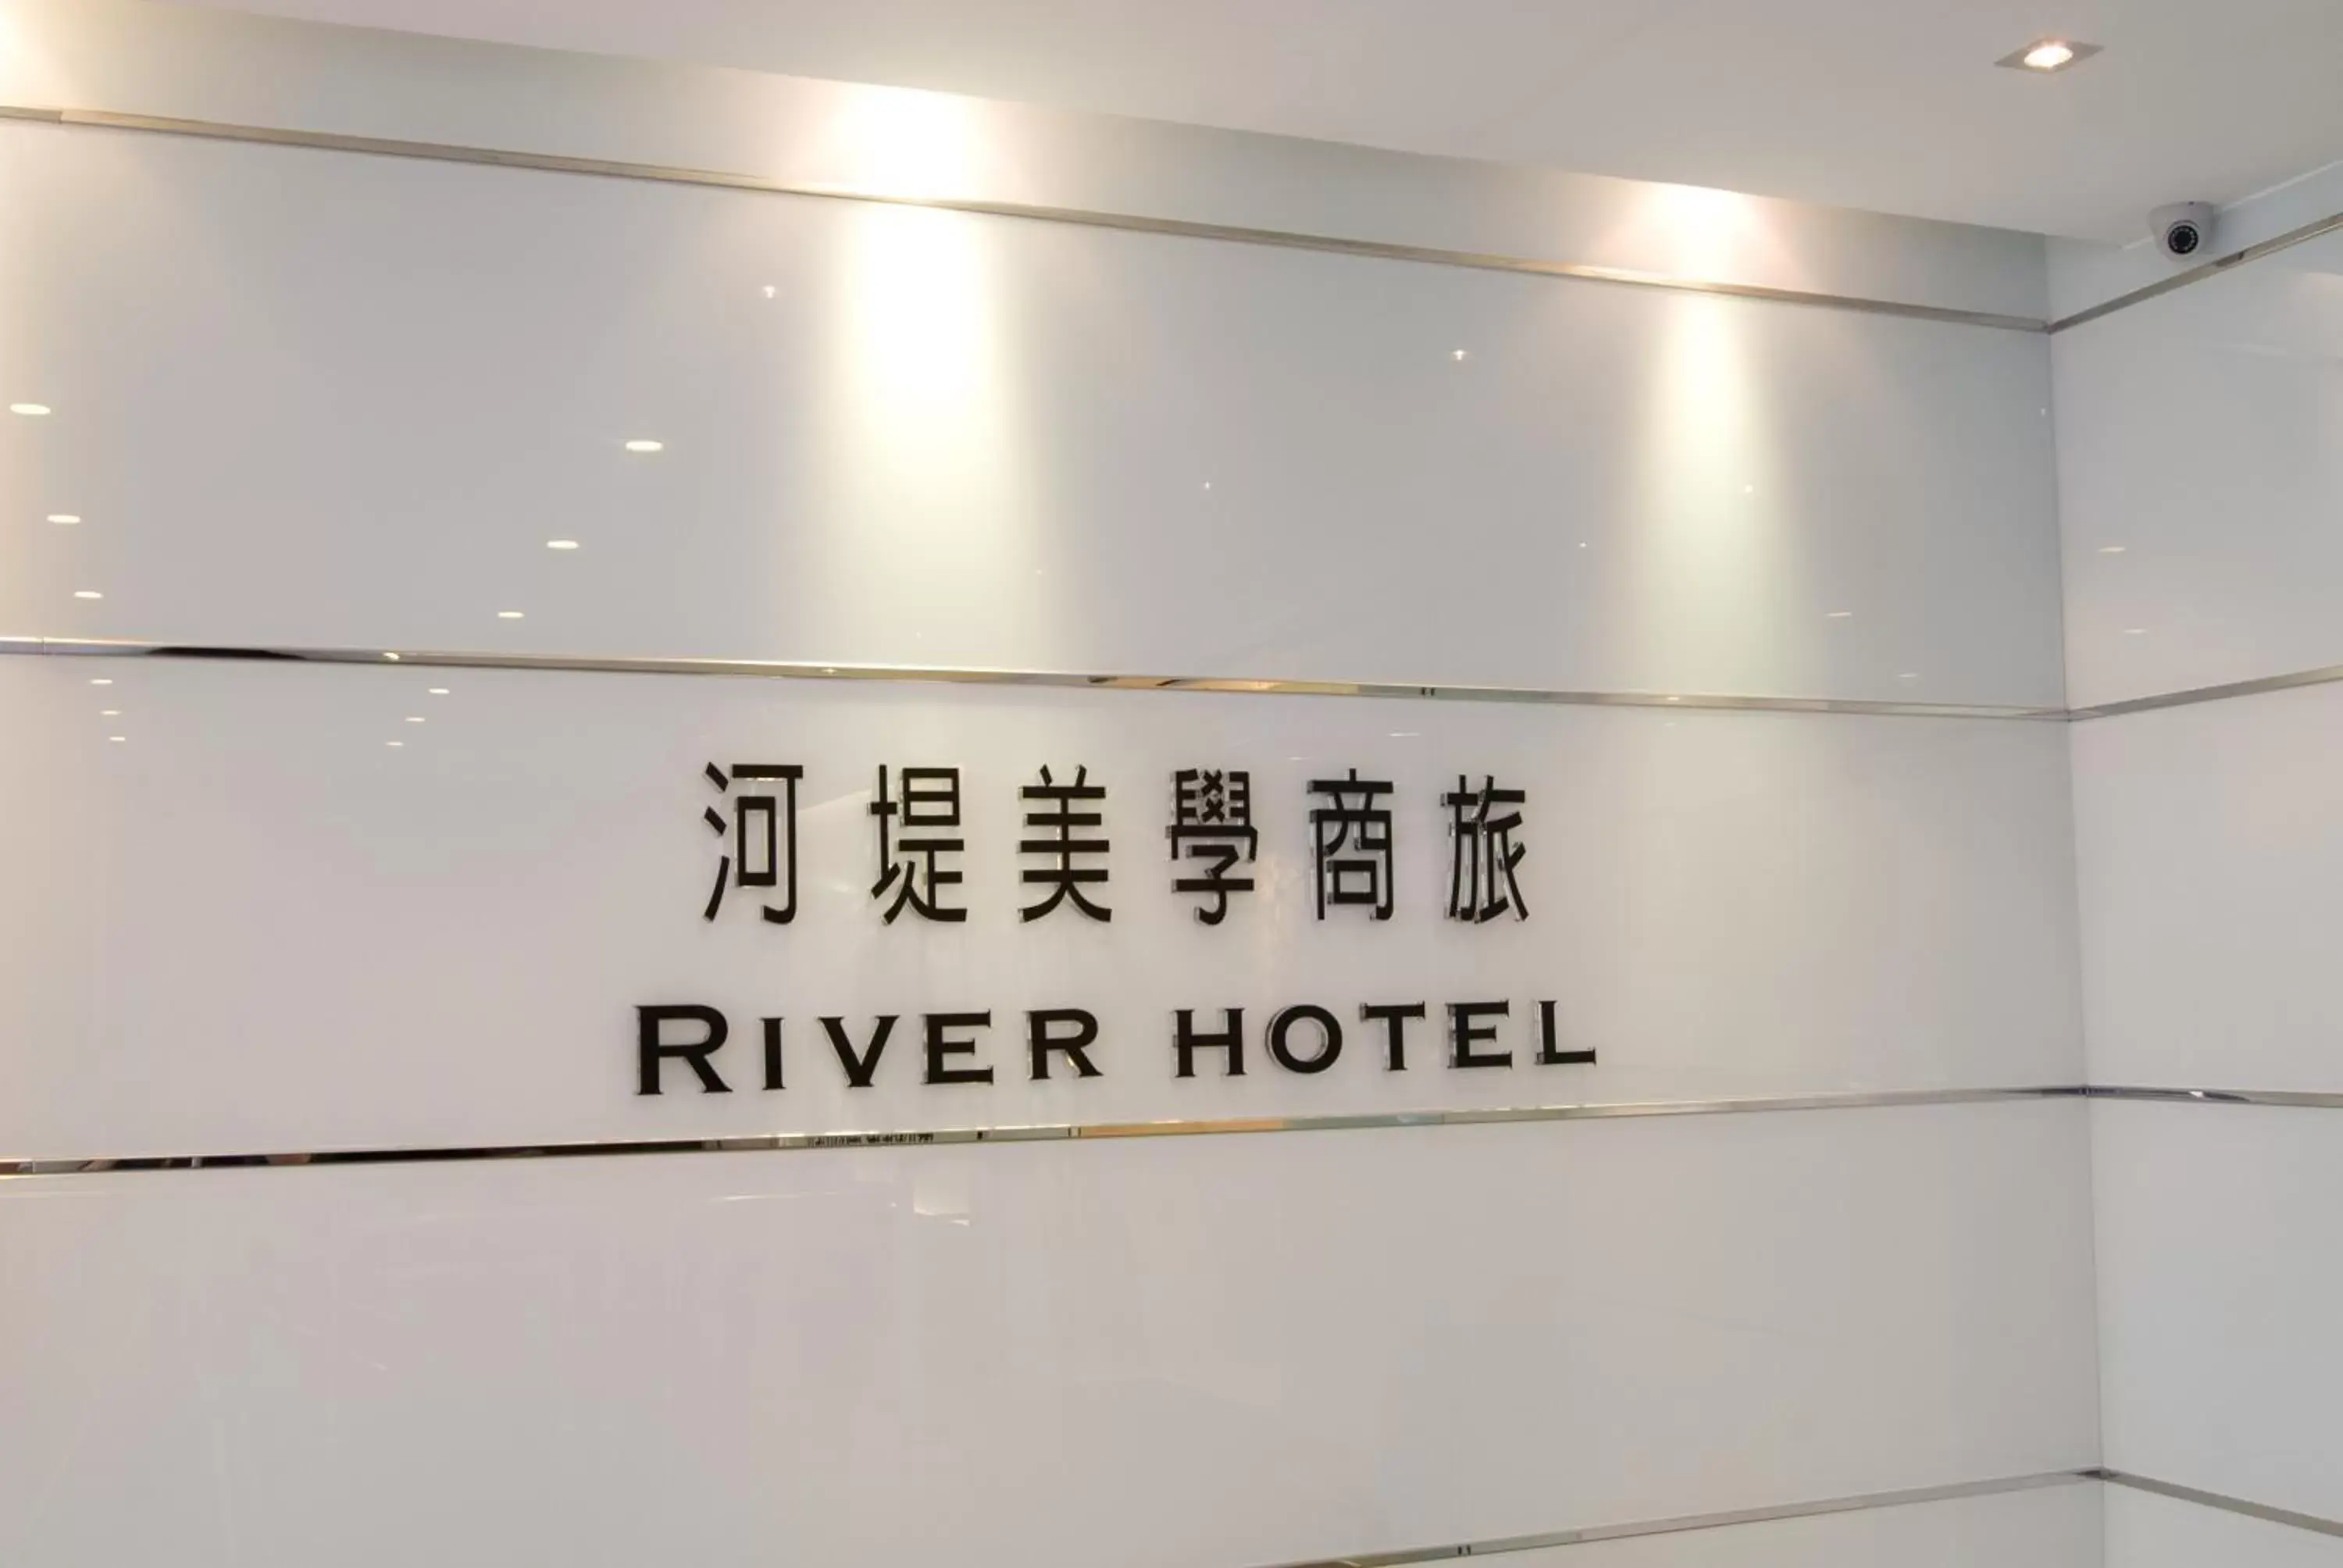 Property logo or sign in The Riverside Hotel Esthetics